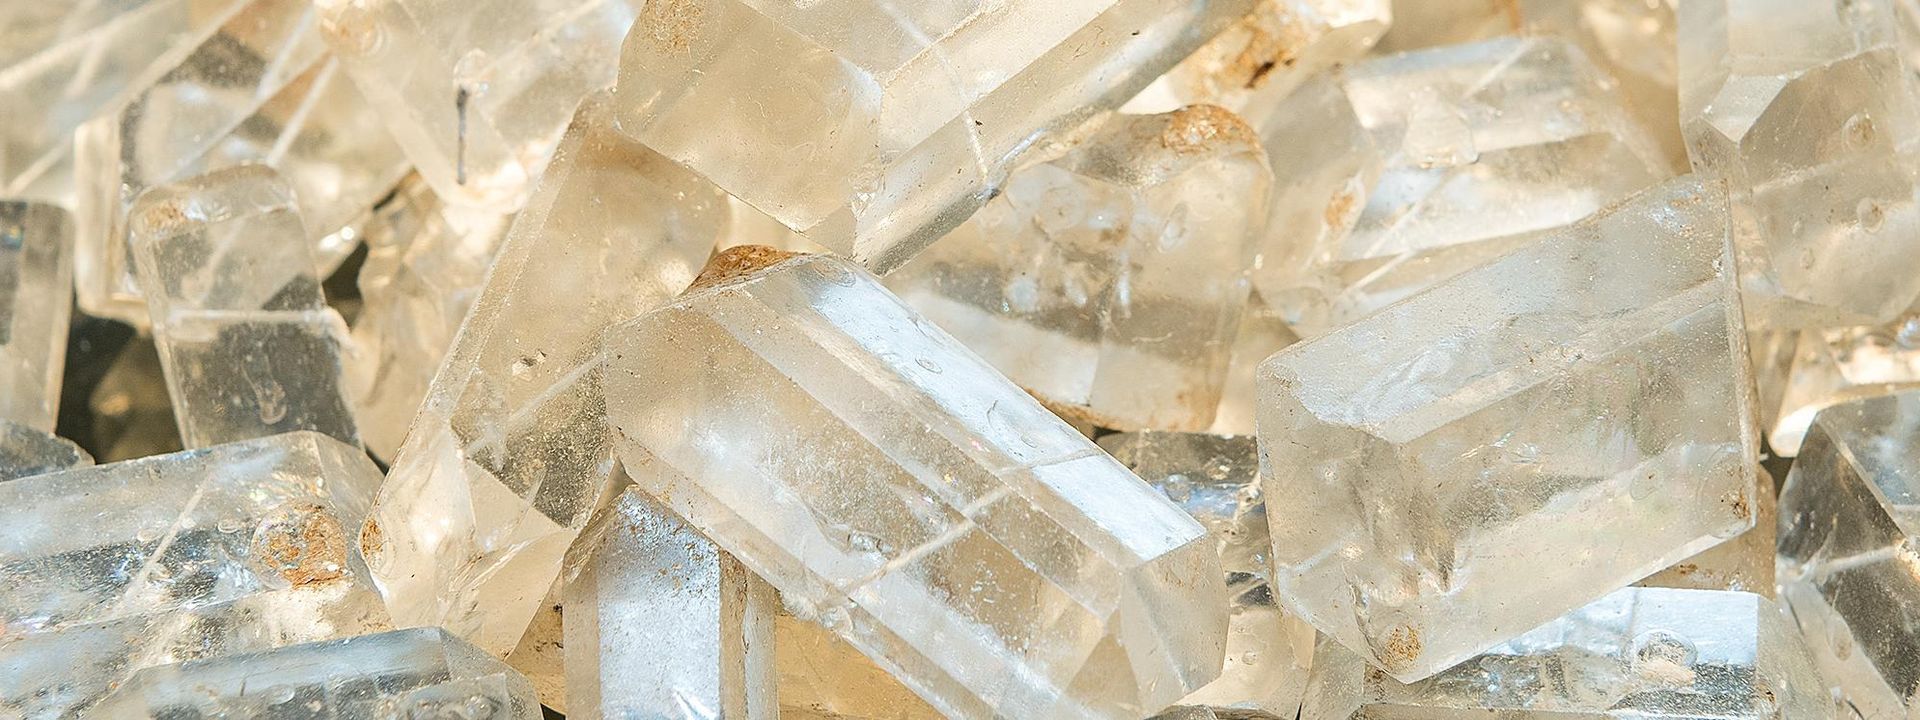 Close-up of large, white sugar crystals.